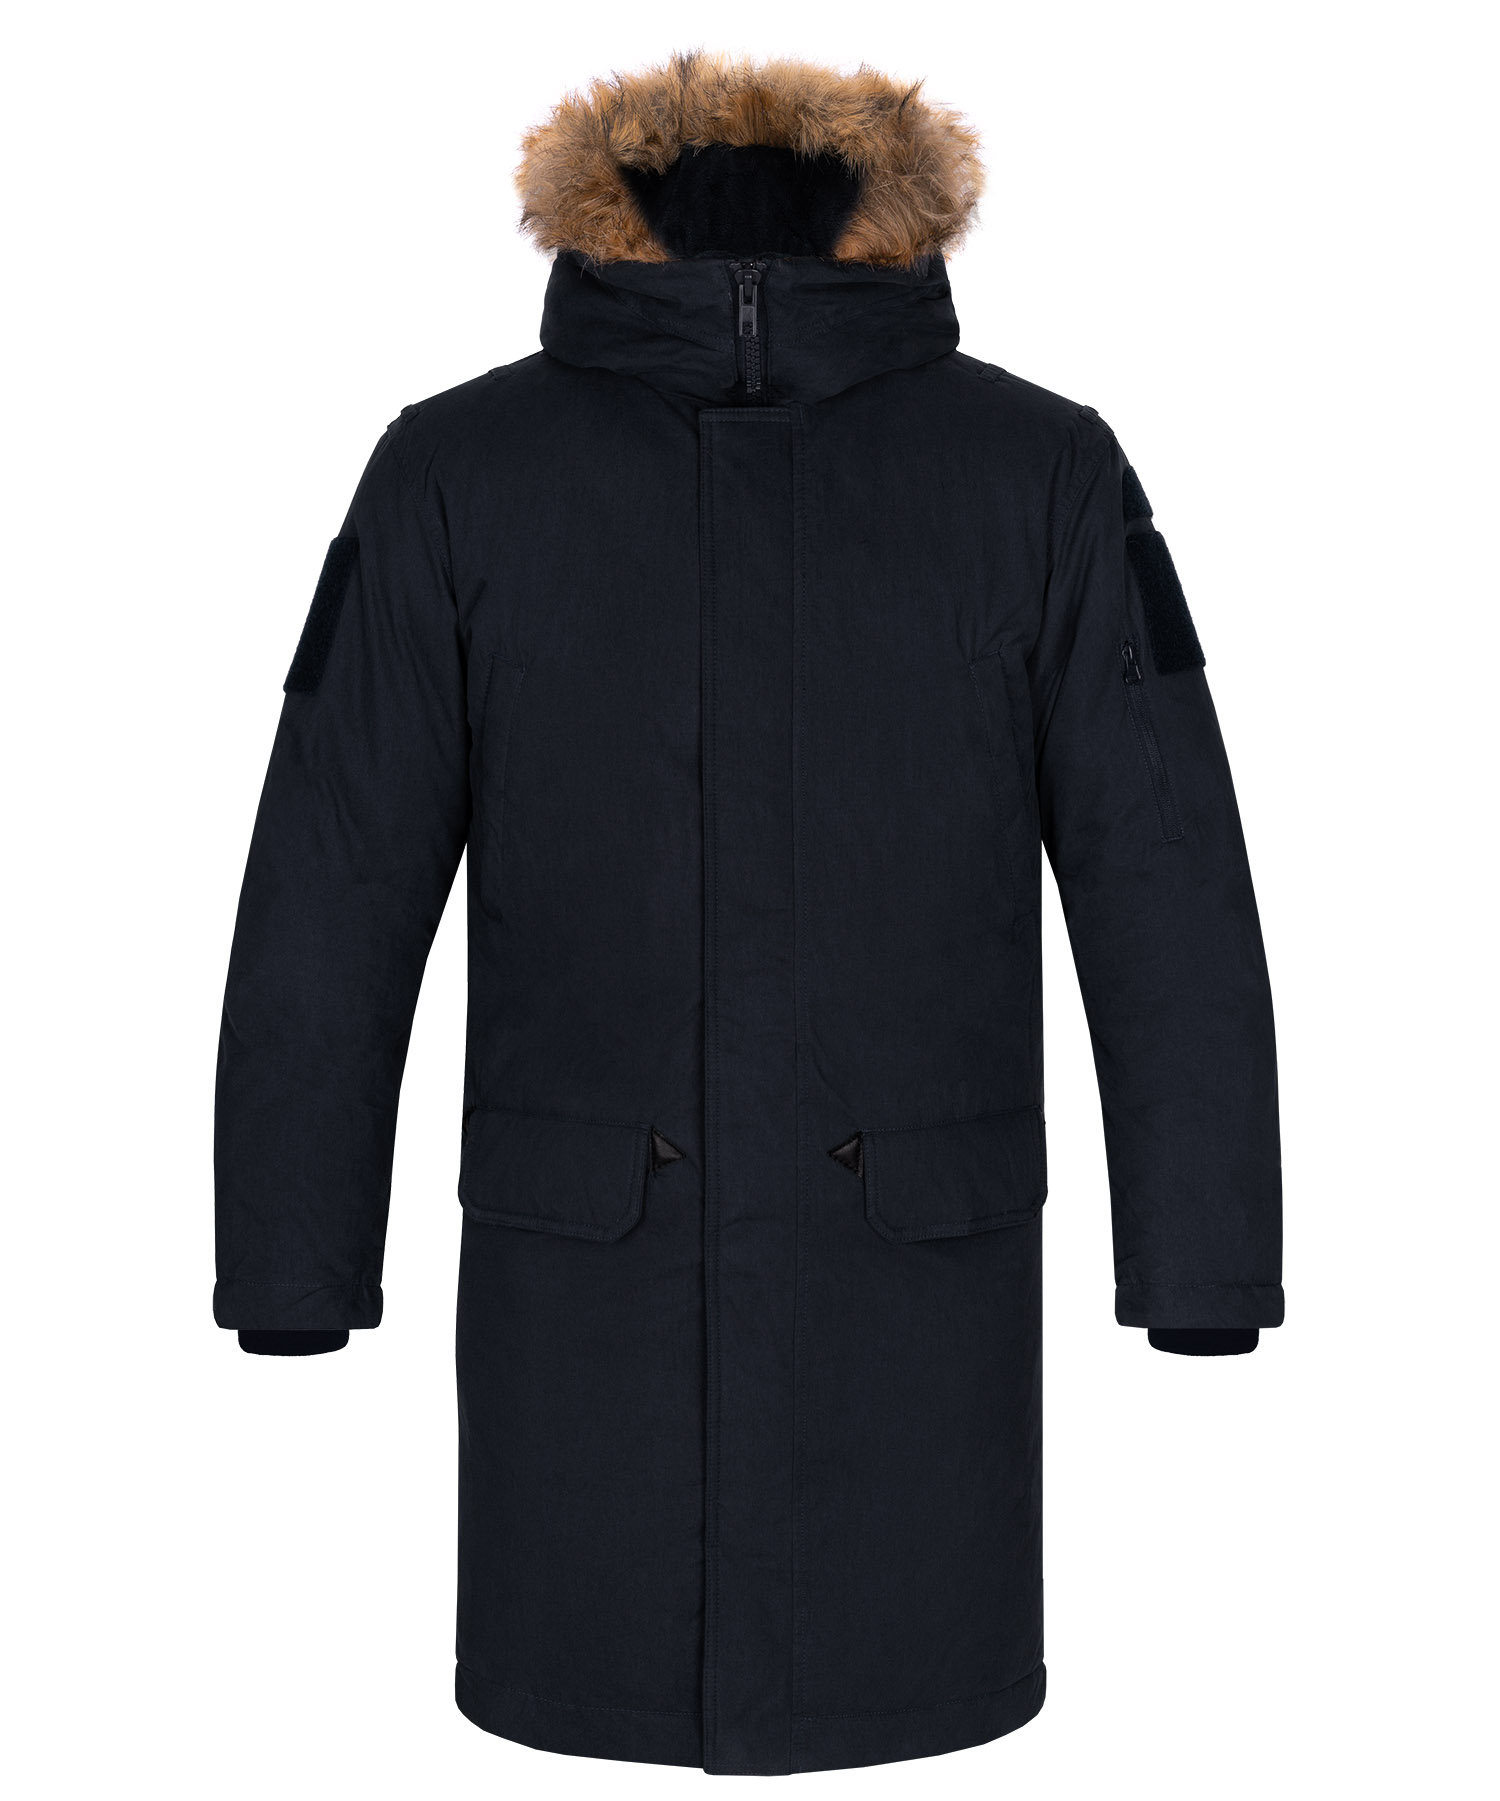 Куртка пуховая Forester К VR, цвет черный 1, размер 38/152 - фото 1